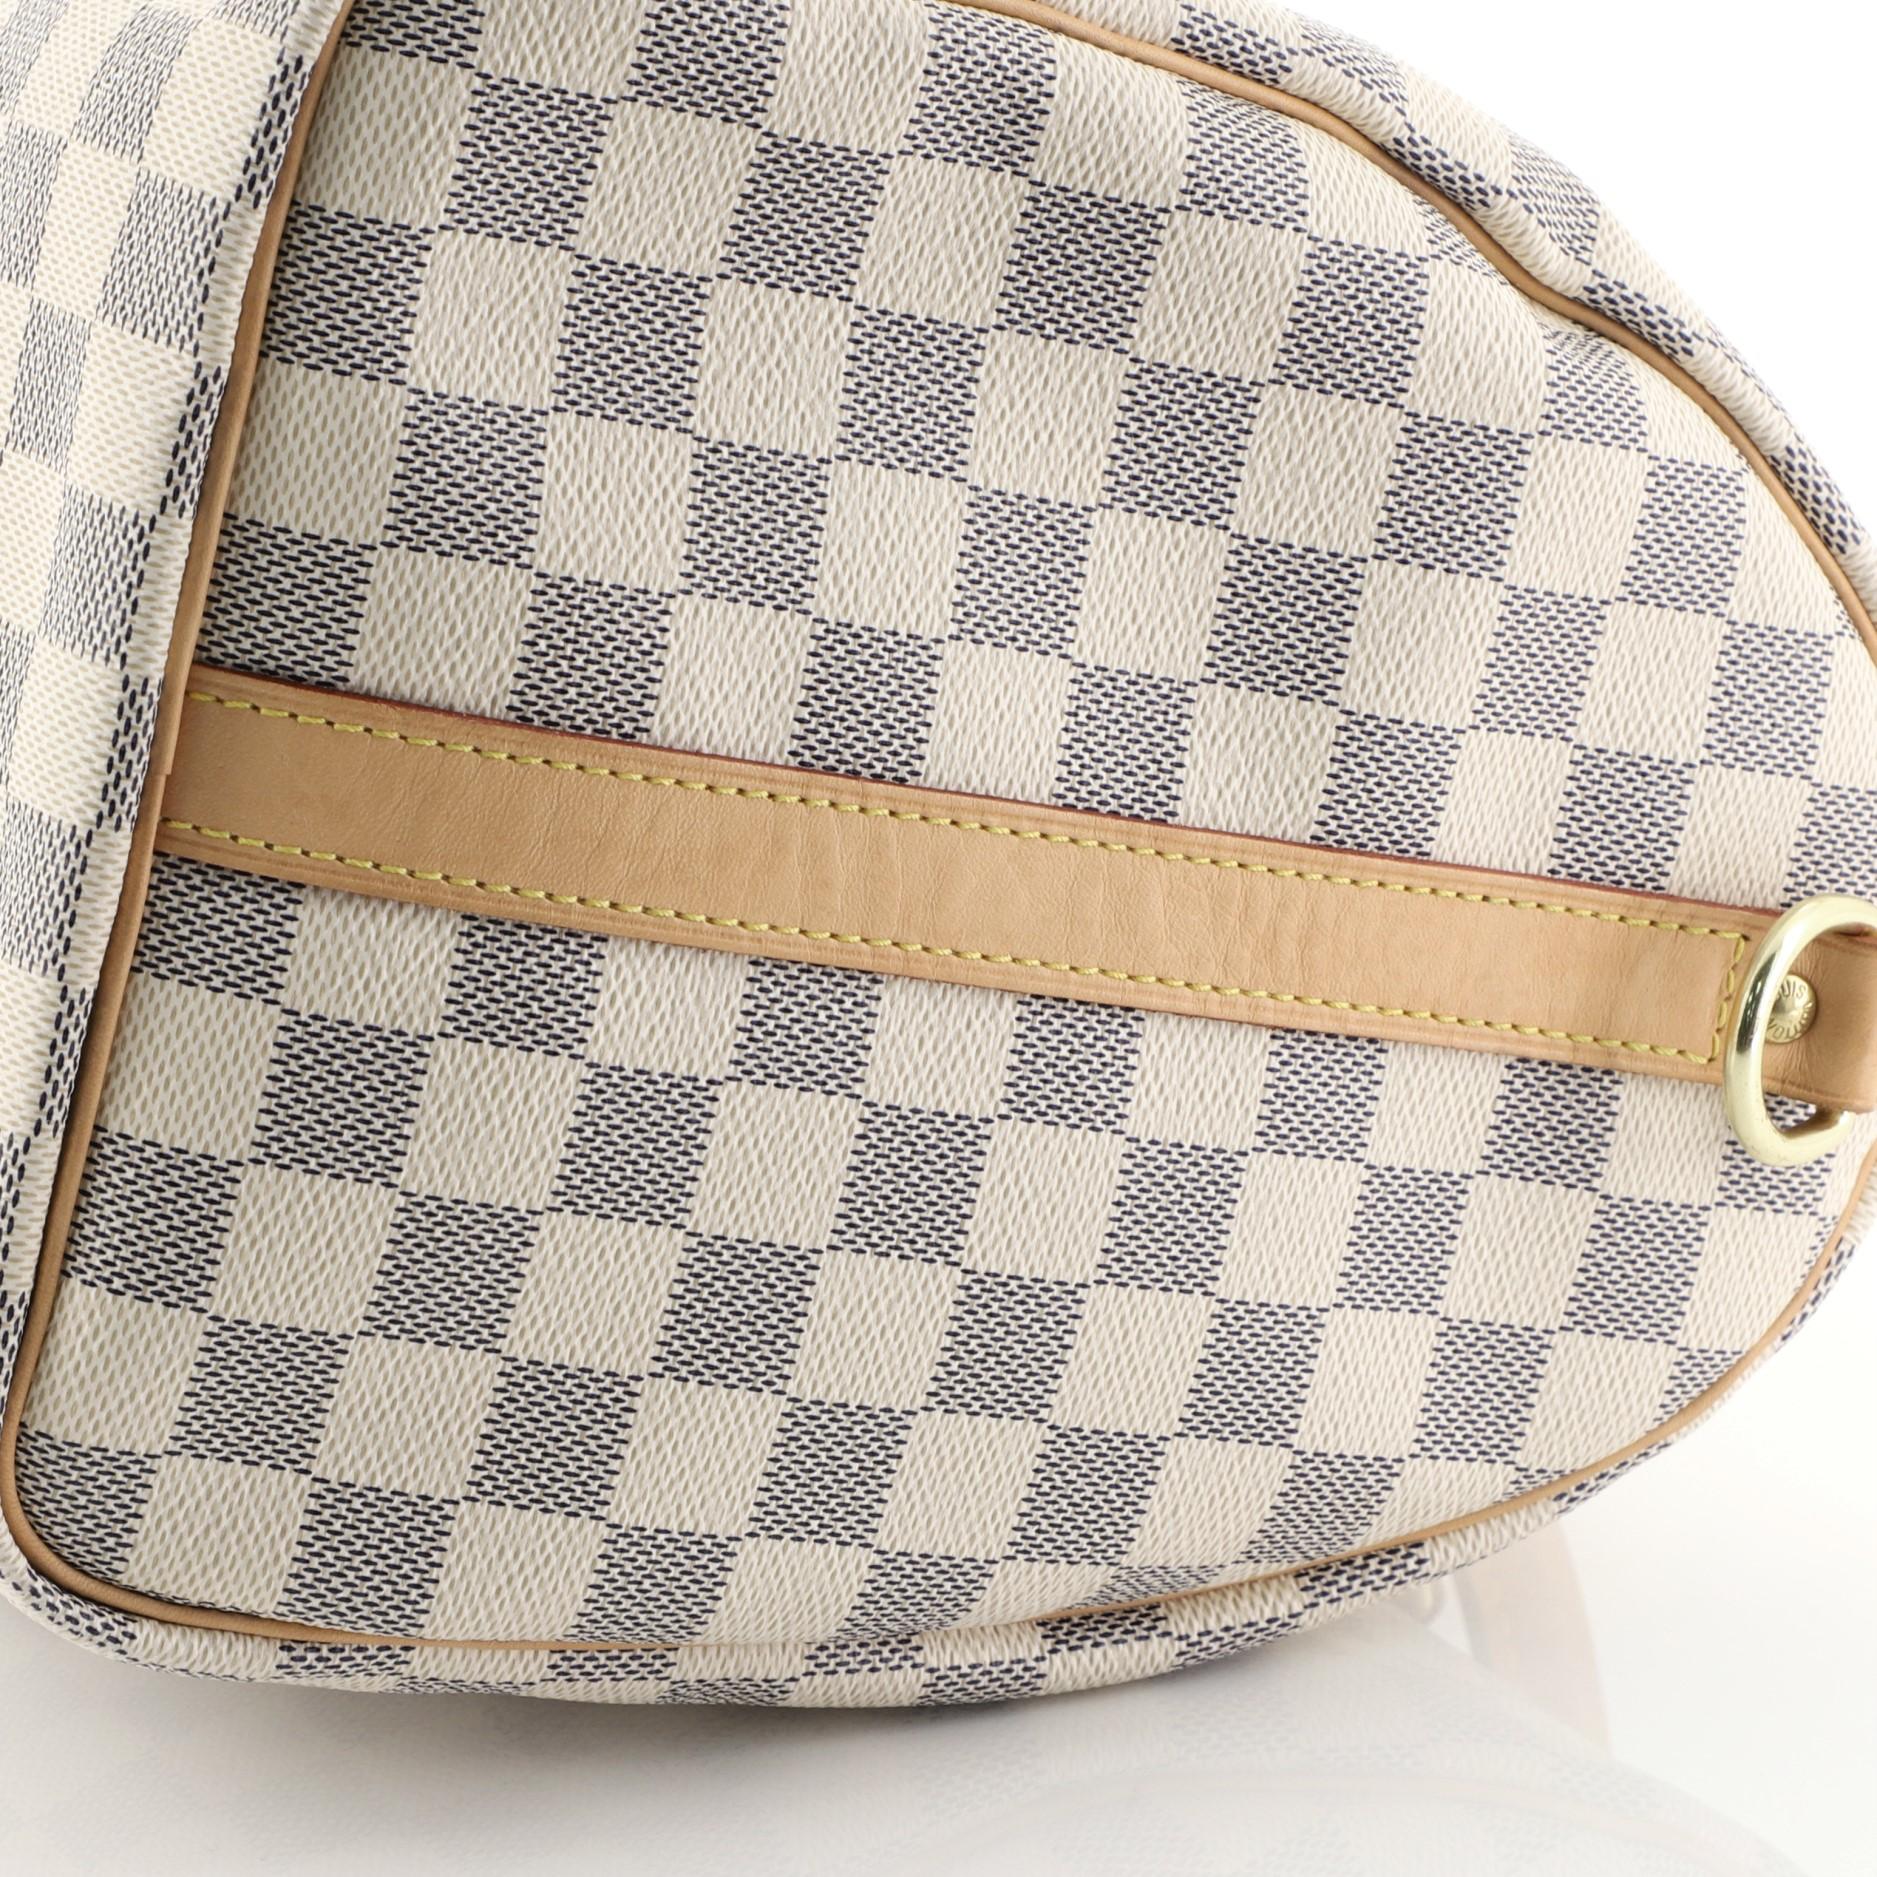 Women's Louis Vuitton Speedy Bandouliere Bag Damier 35